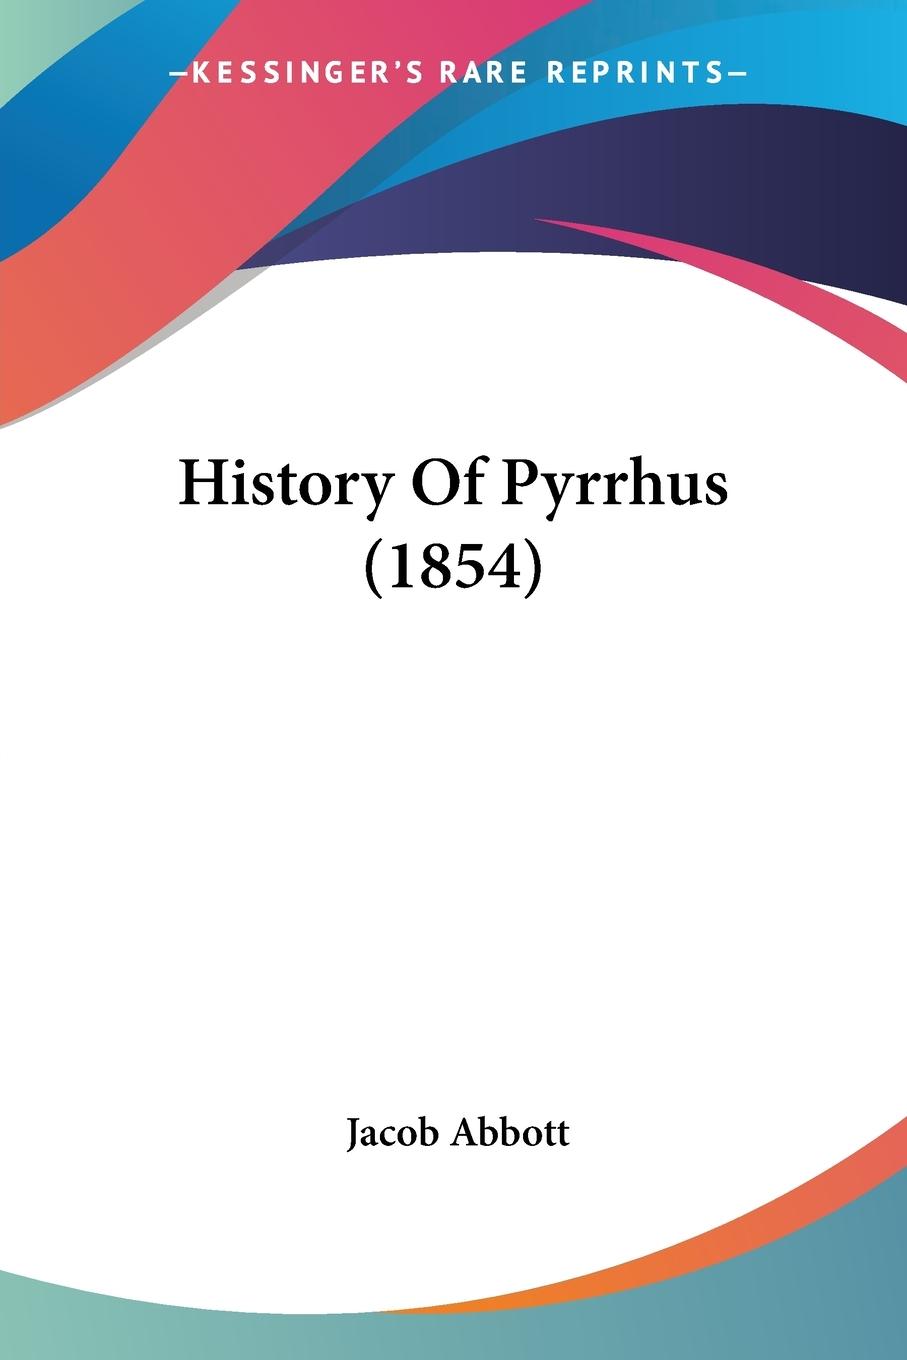 History Of Pyrrhus (1854) - Abbott, Jacob